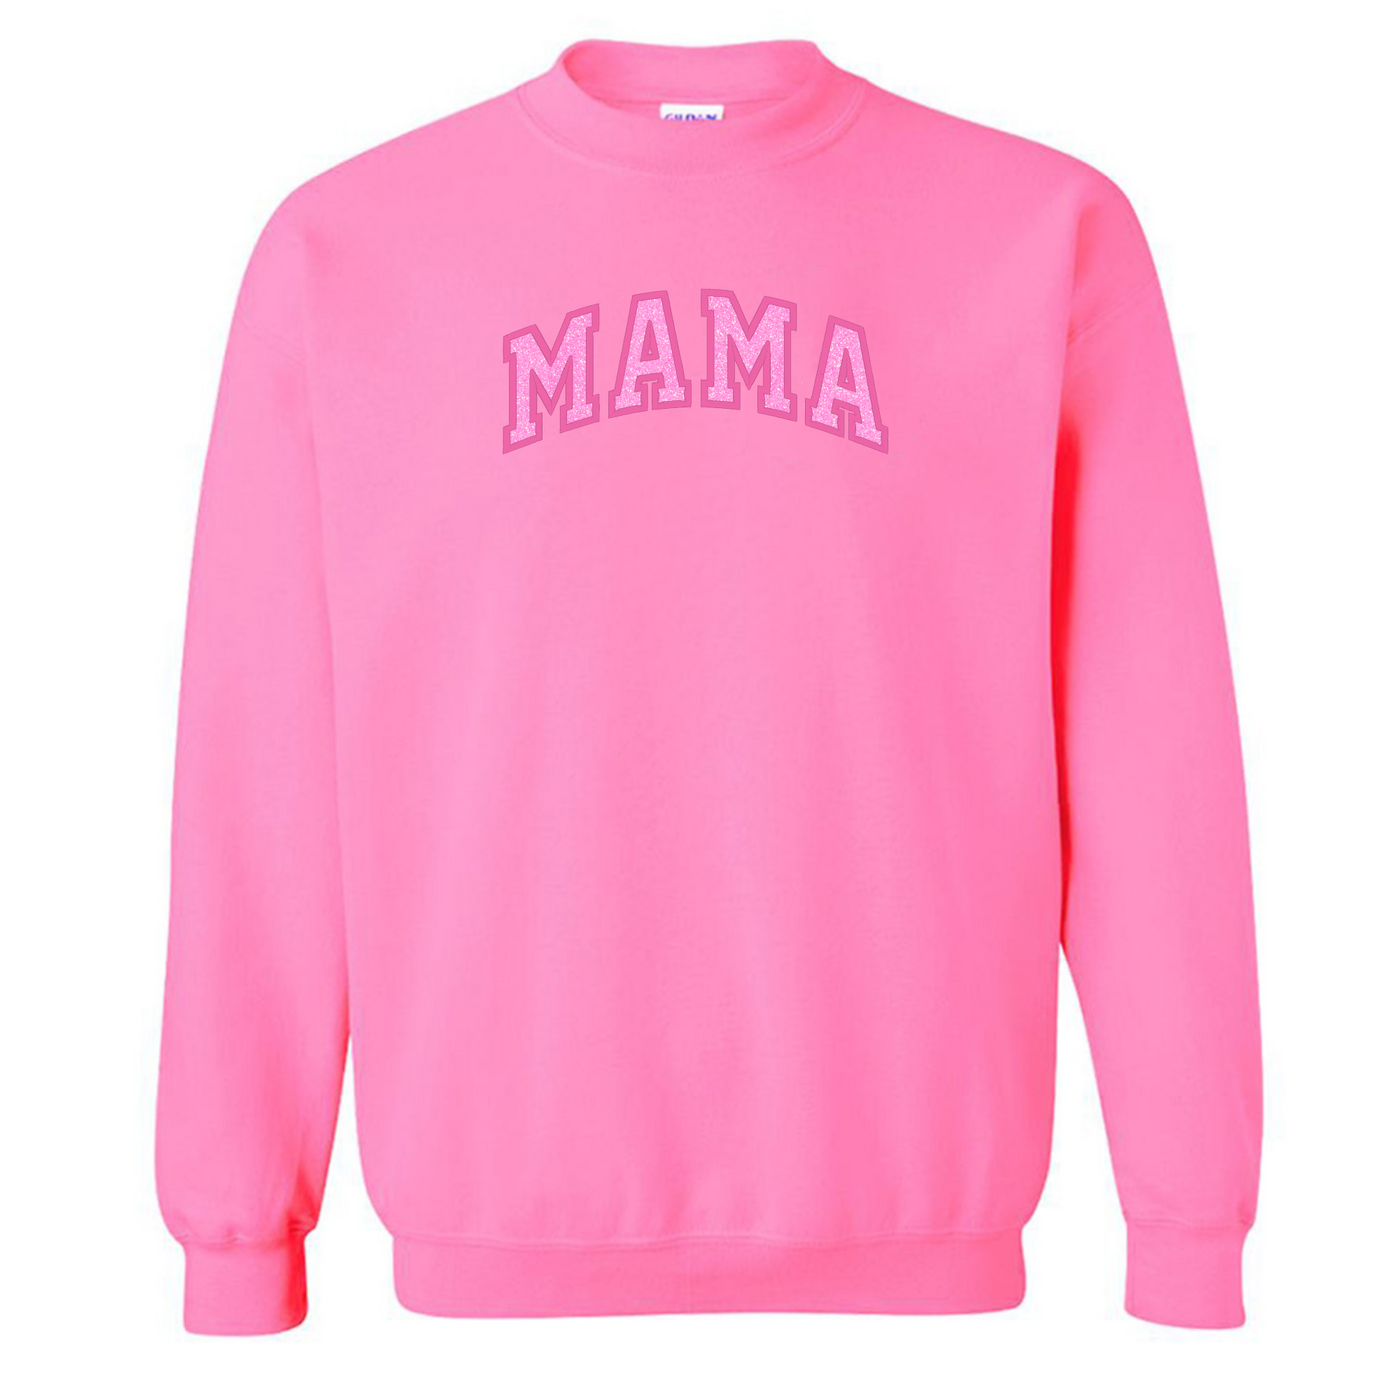 Glitter Embroidery ‘Mama’ Crewneck Sweatshirt